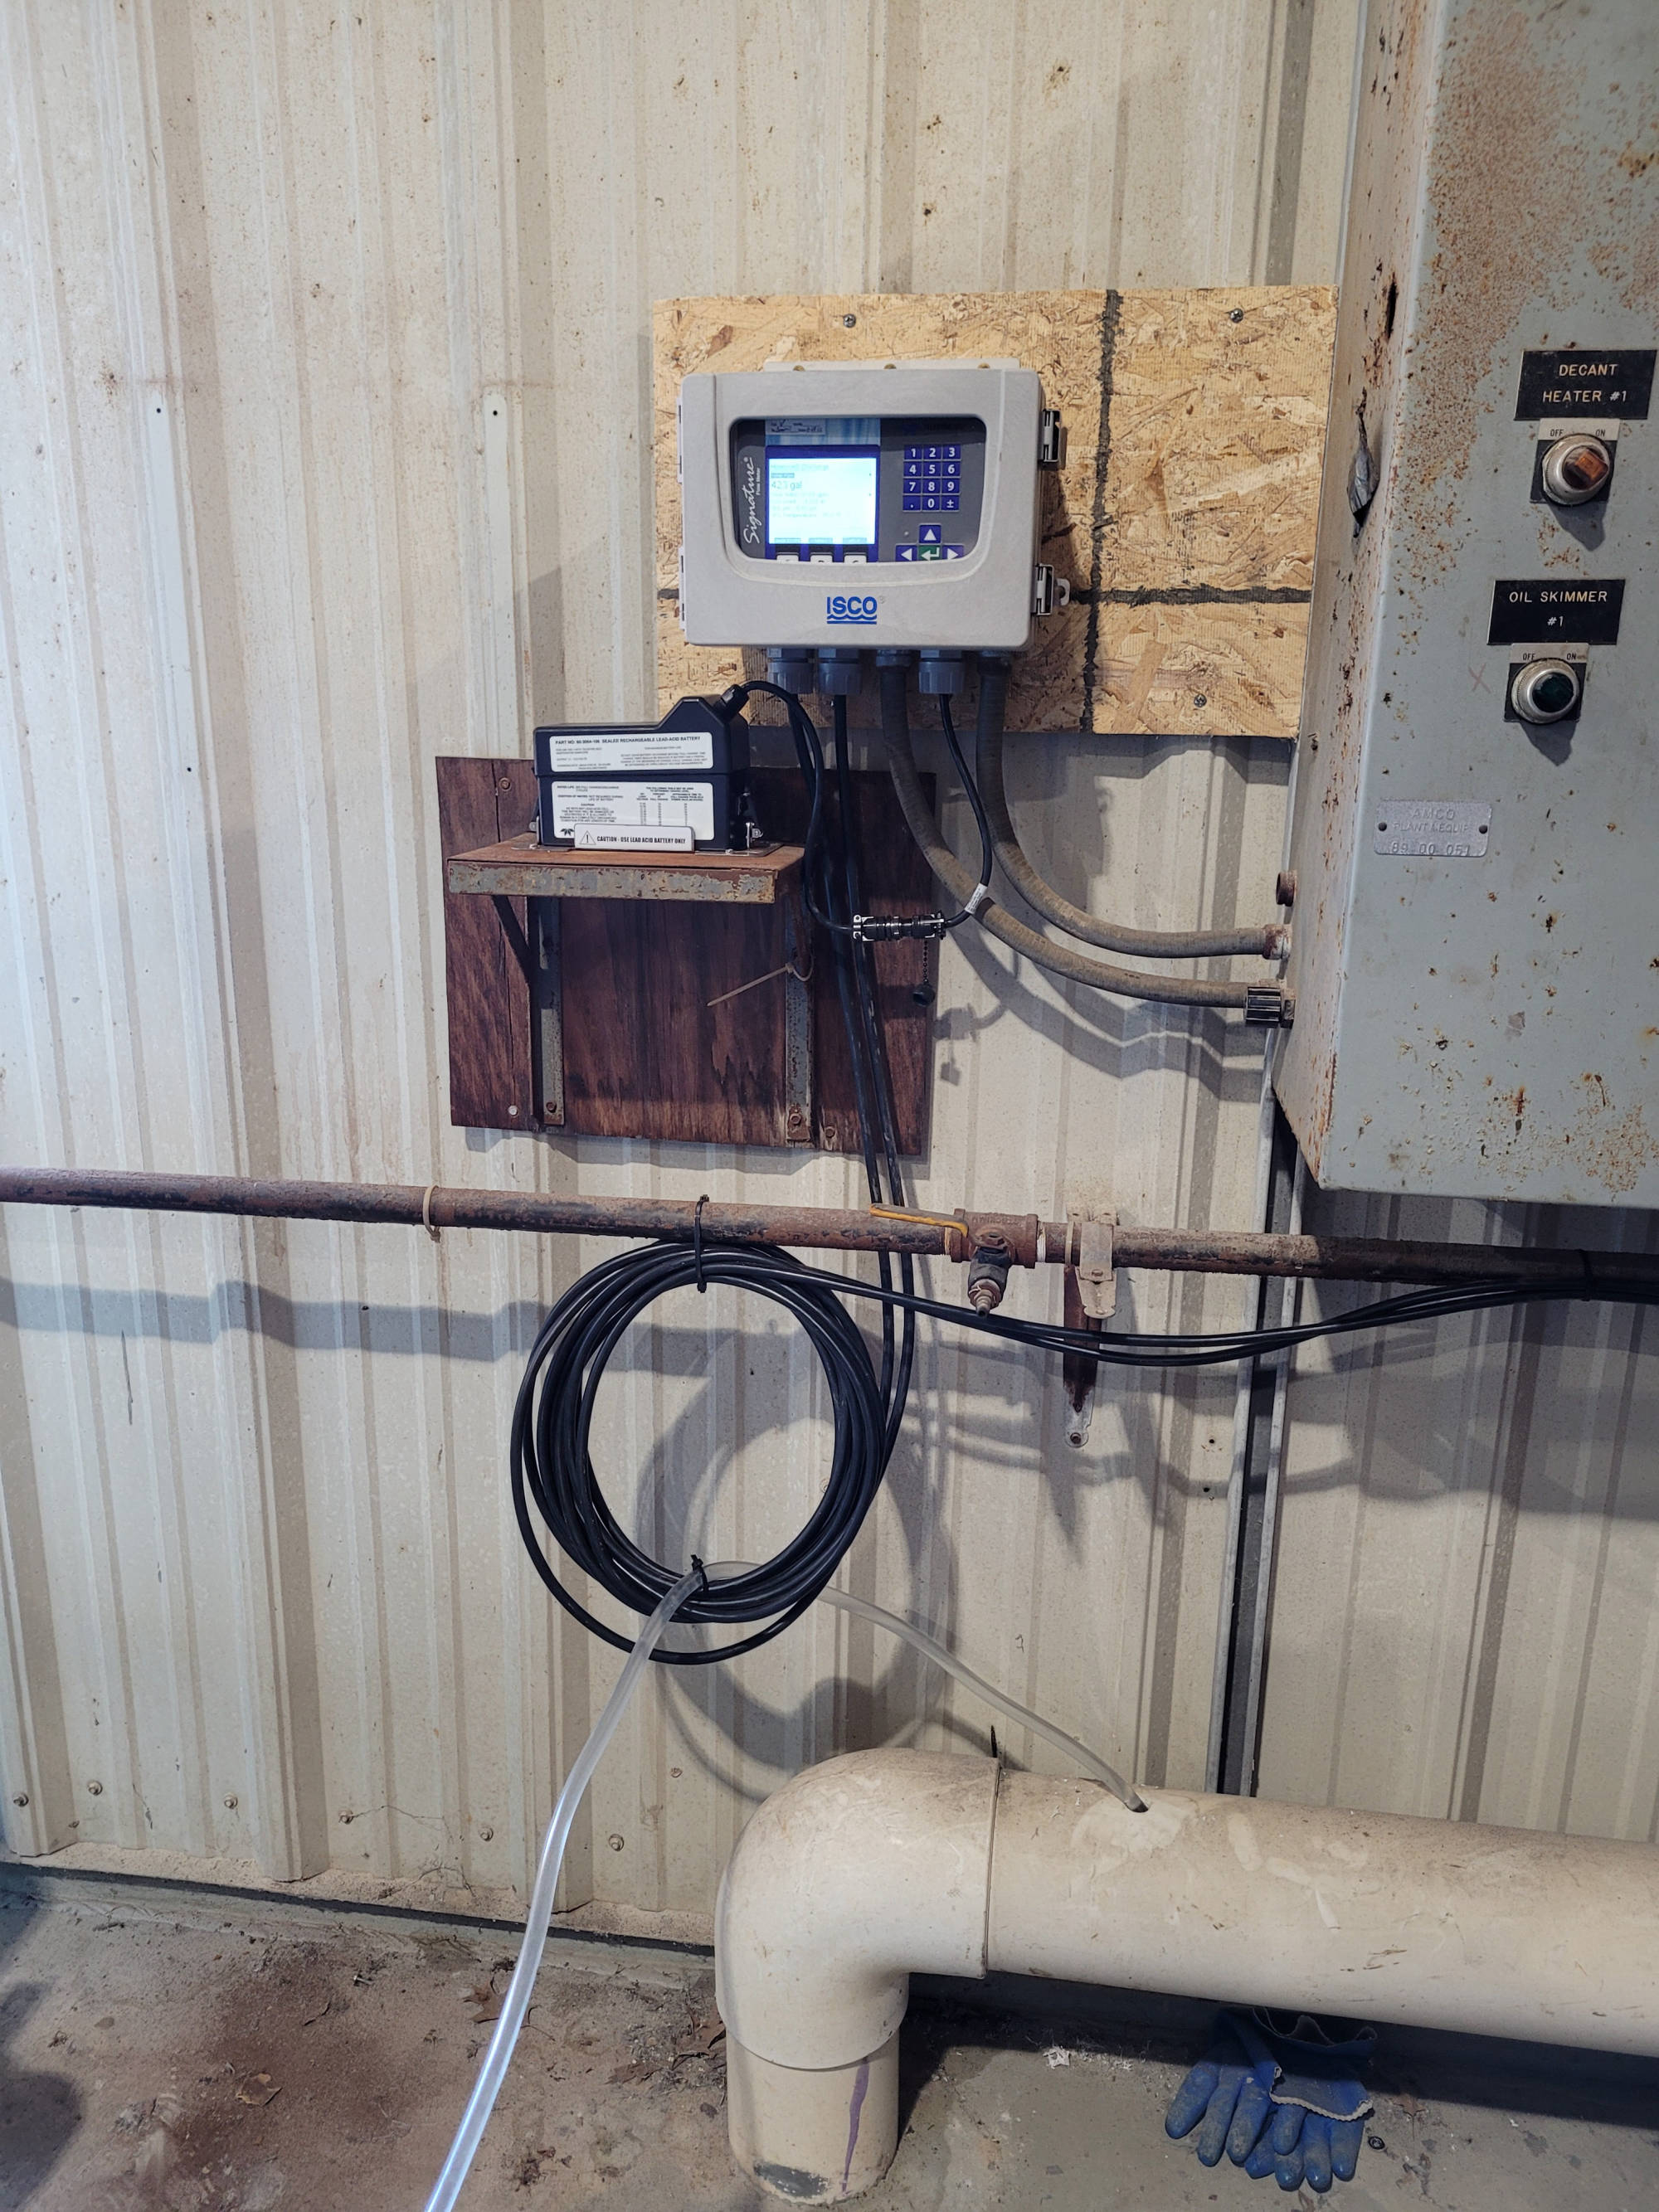 Nebraska City NE - Honeywell - Replaced old meter with Teledyne ISCO Signature Ultrasonic and 5800 Refrigerated Sampler.